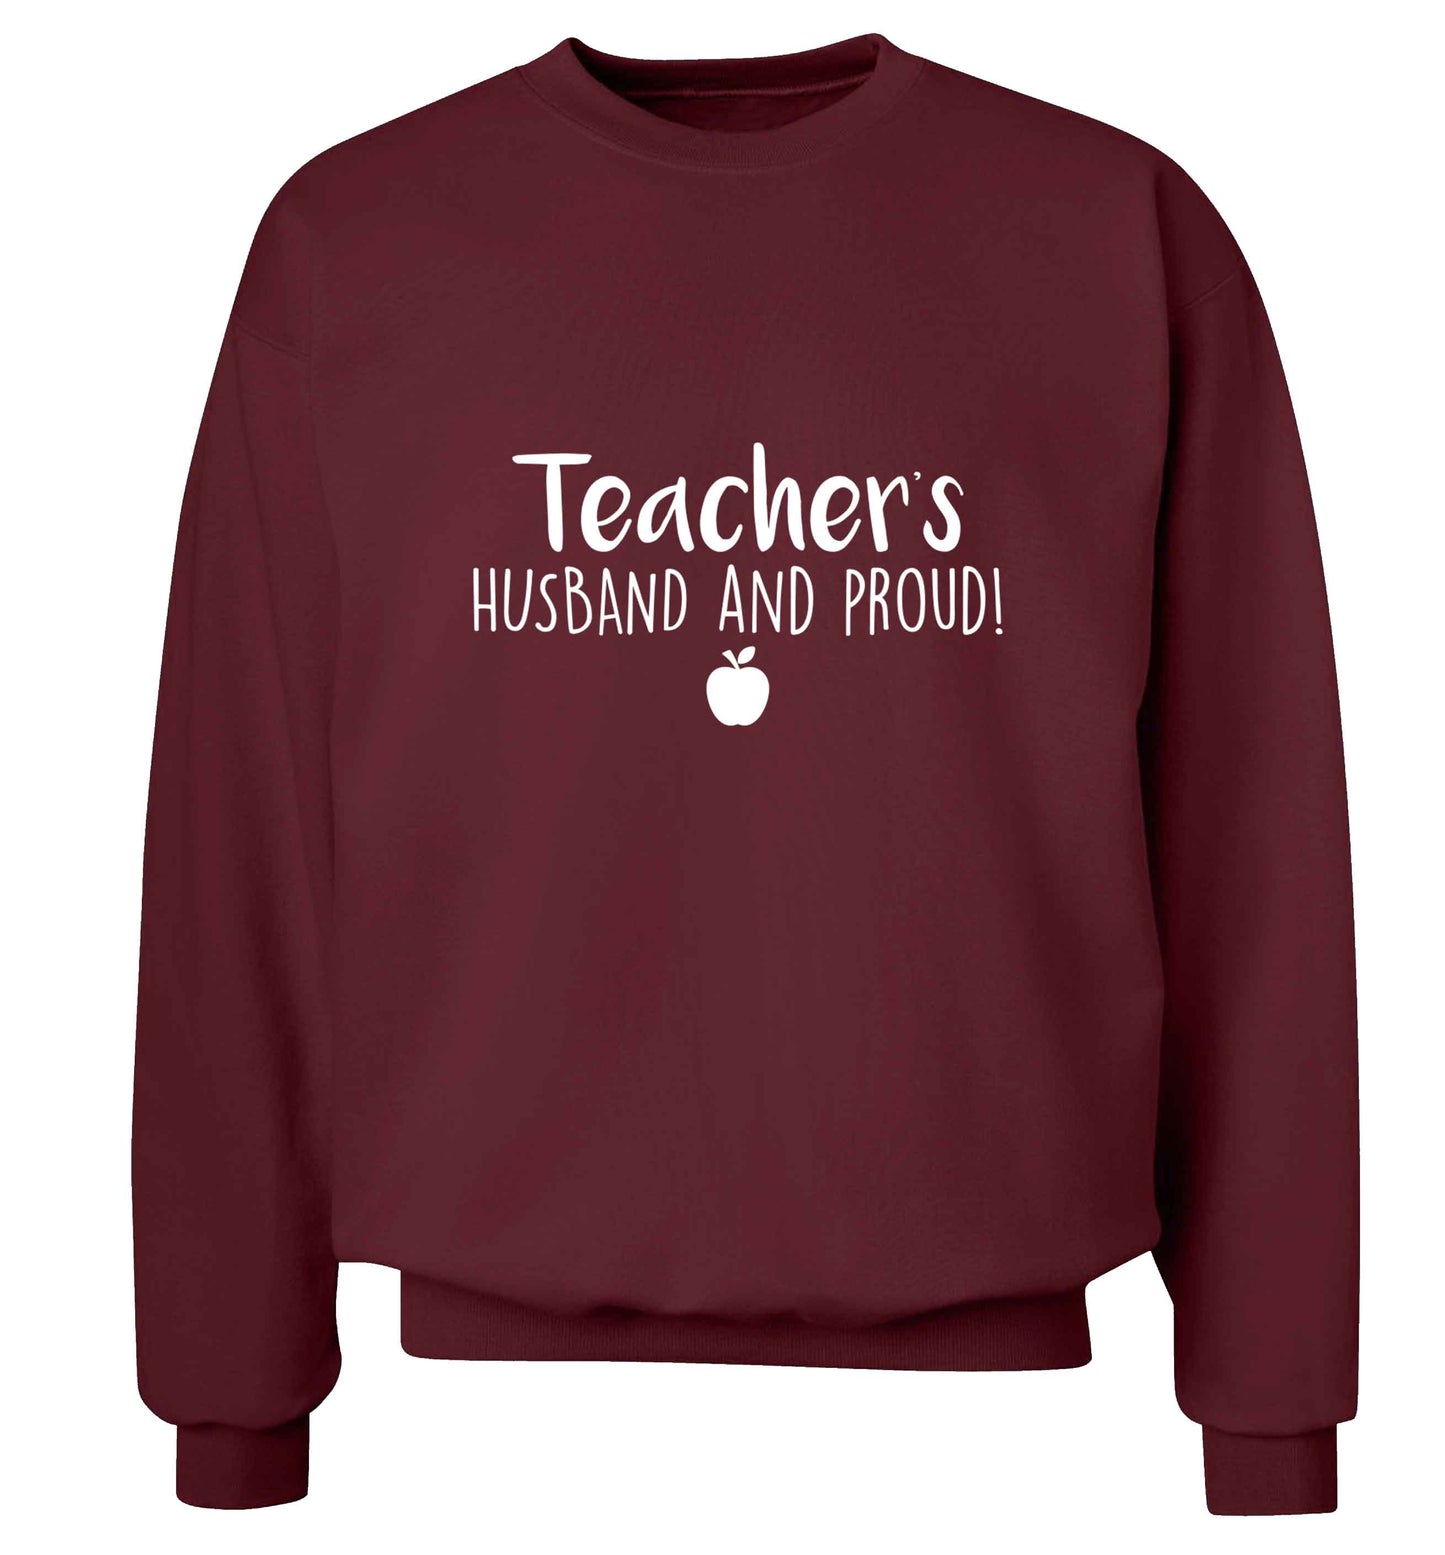 Teachers husband and proud adult's unisex maroon sweater 2XL